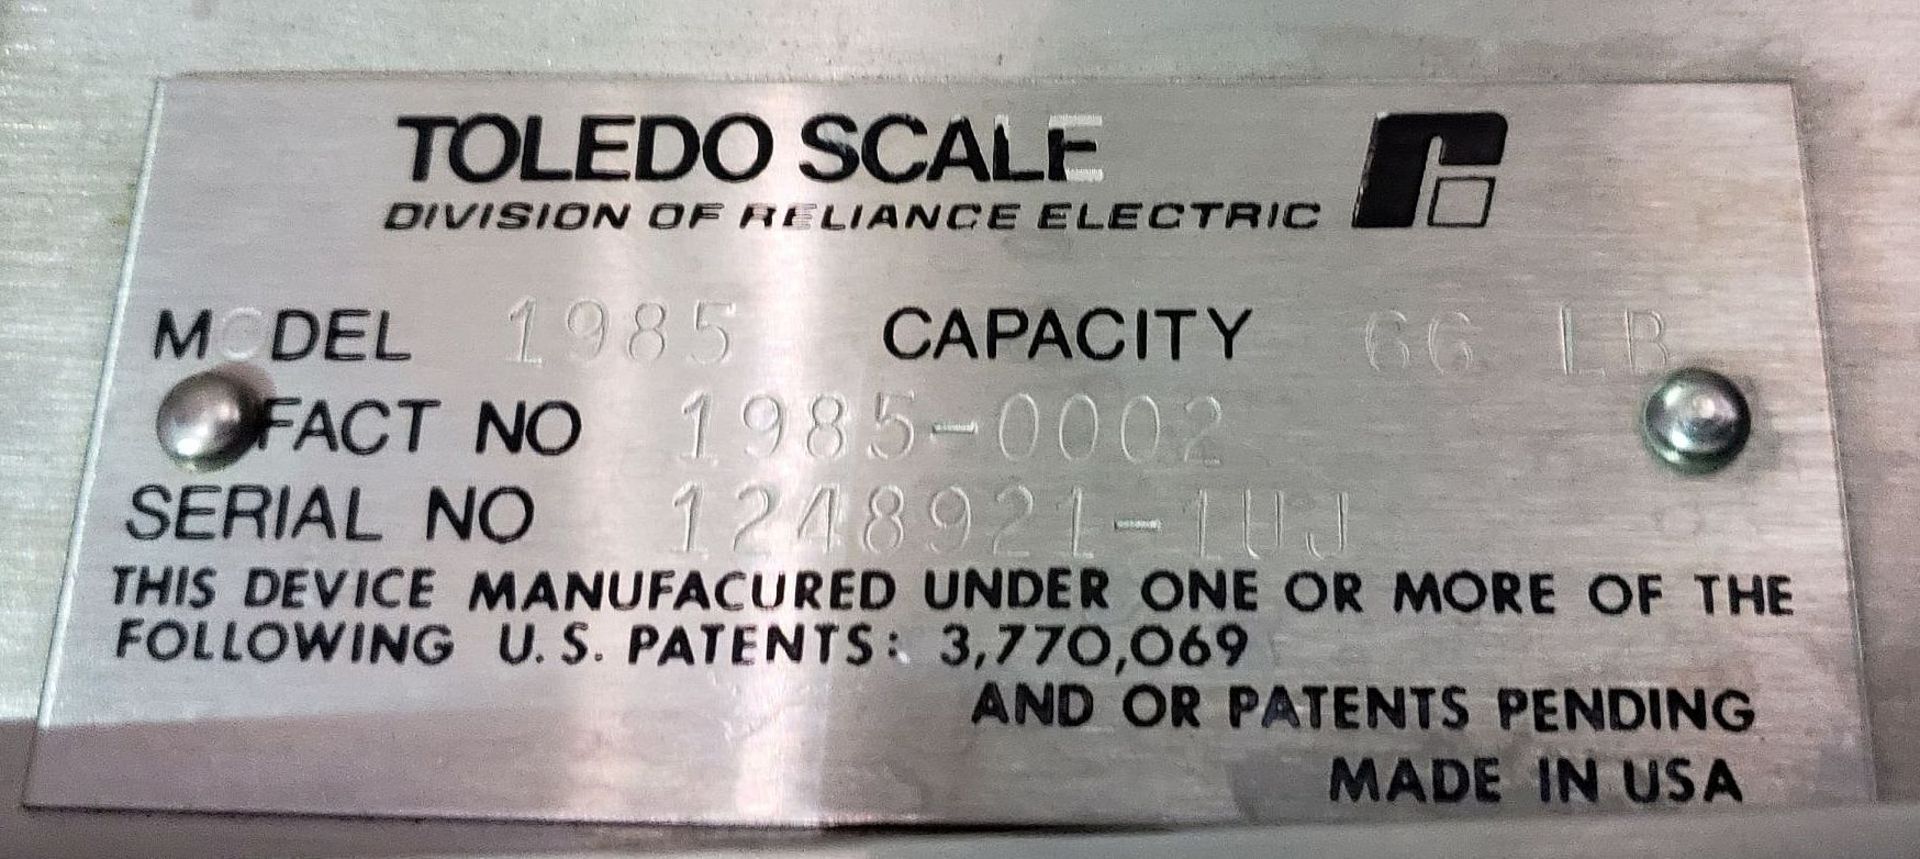 Mettler Toledo Table Top Scale, model 1985 - Image 9 of 9